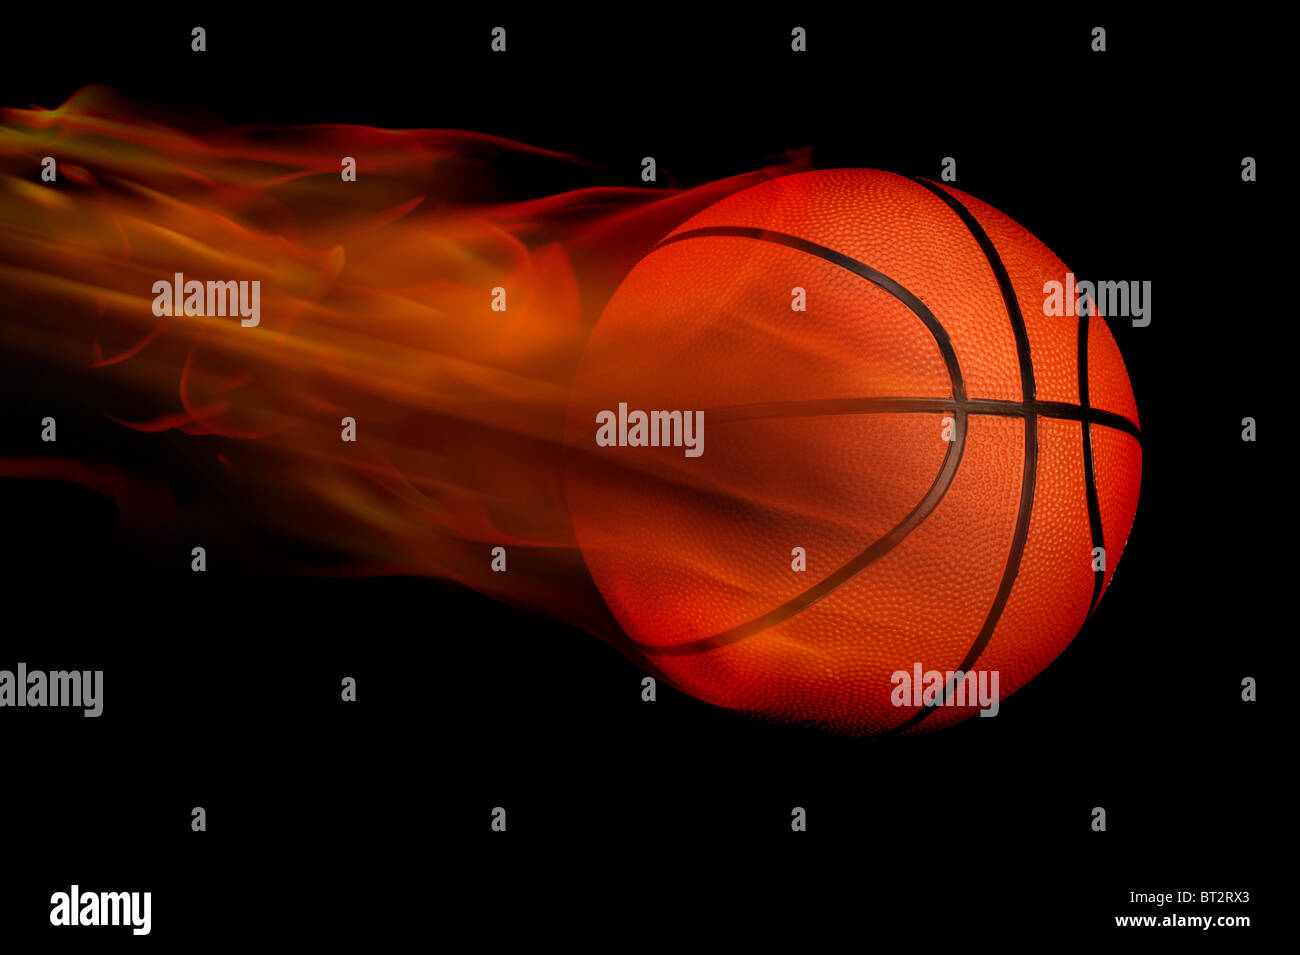 Basketball on Fire Stock Photo